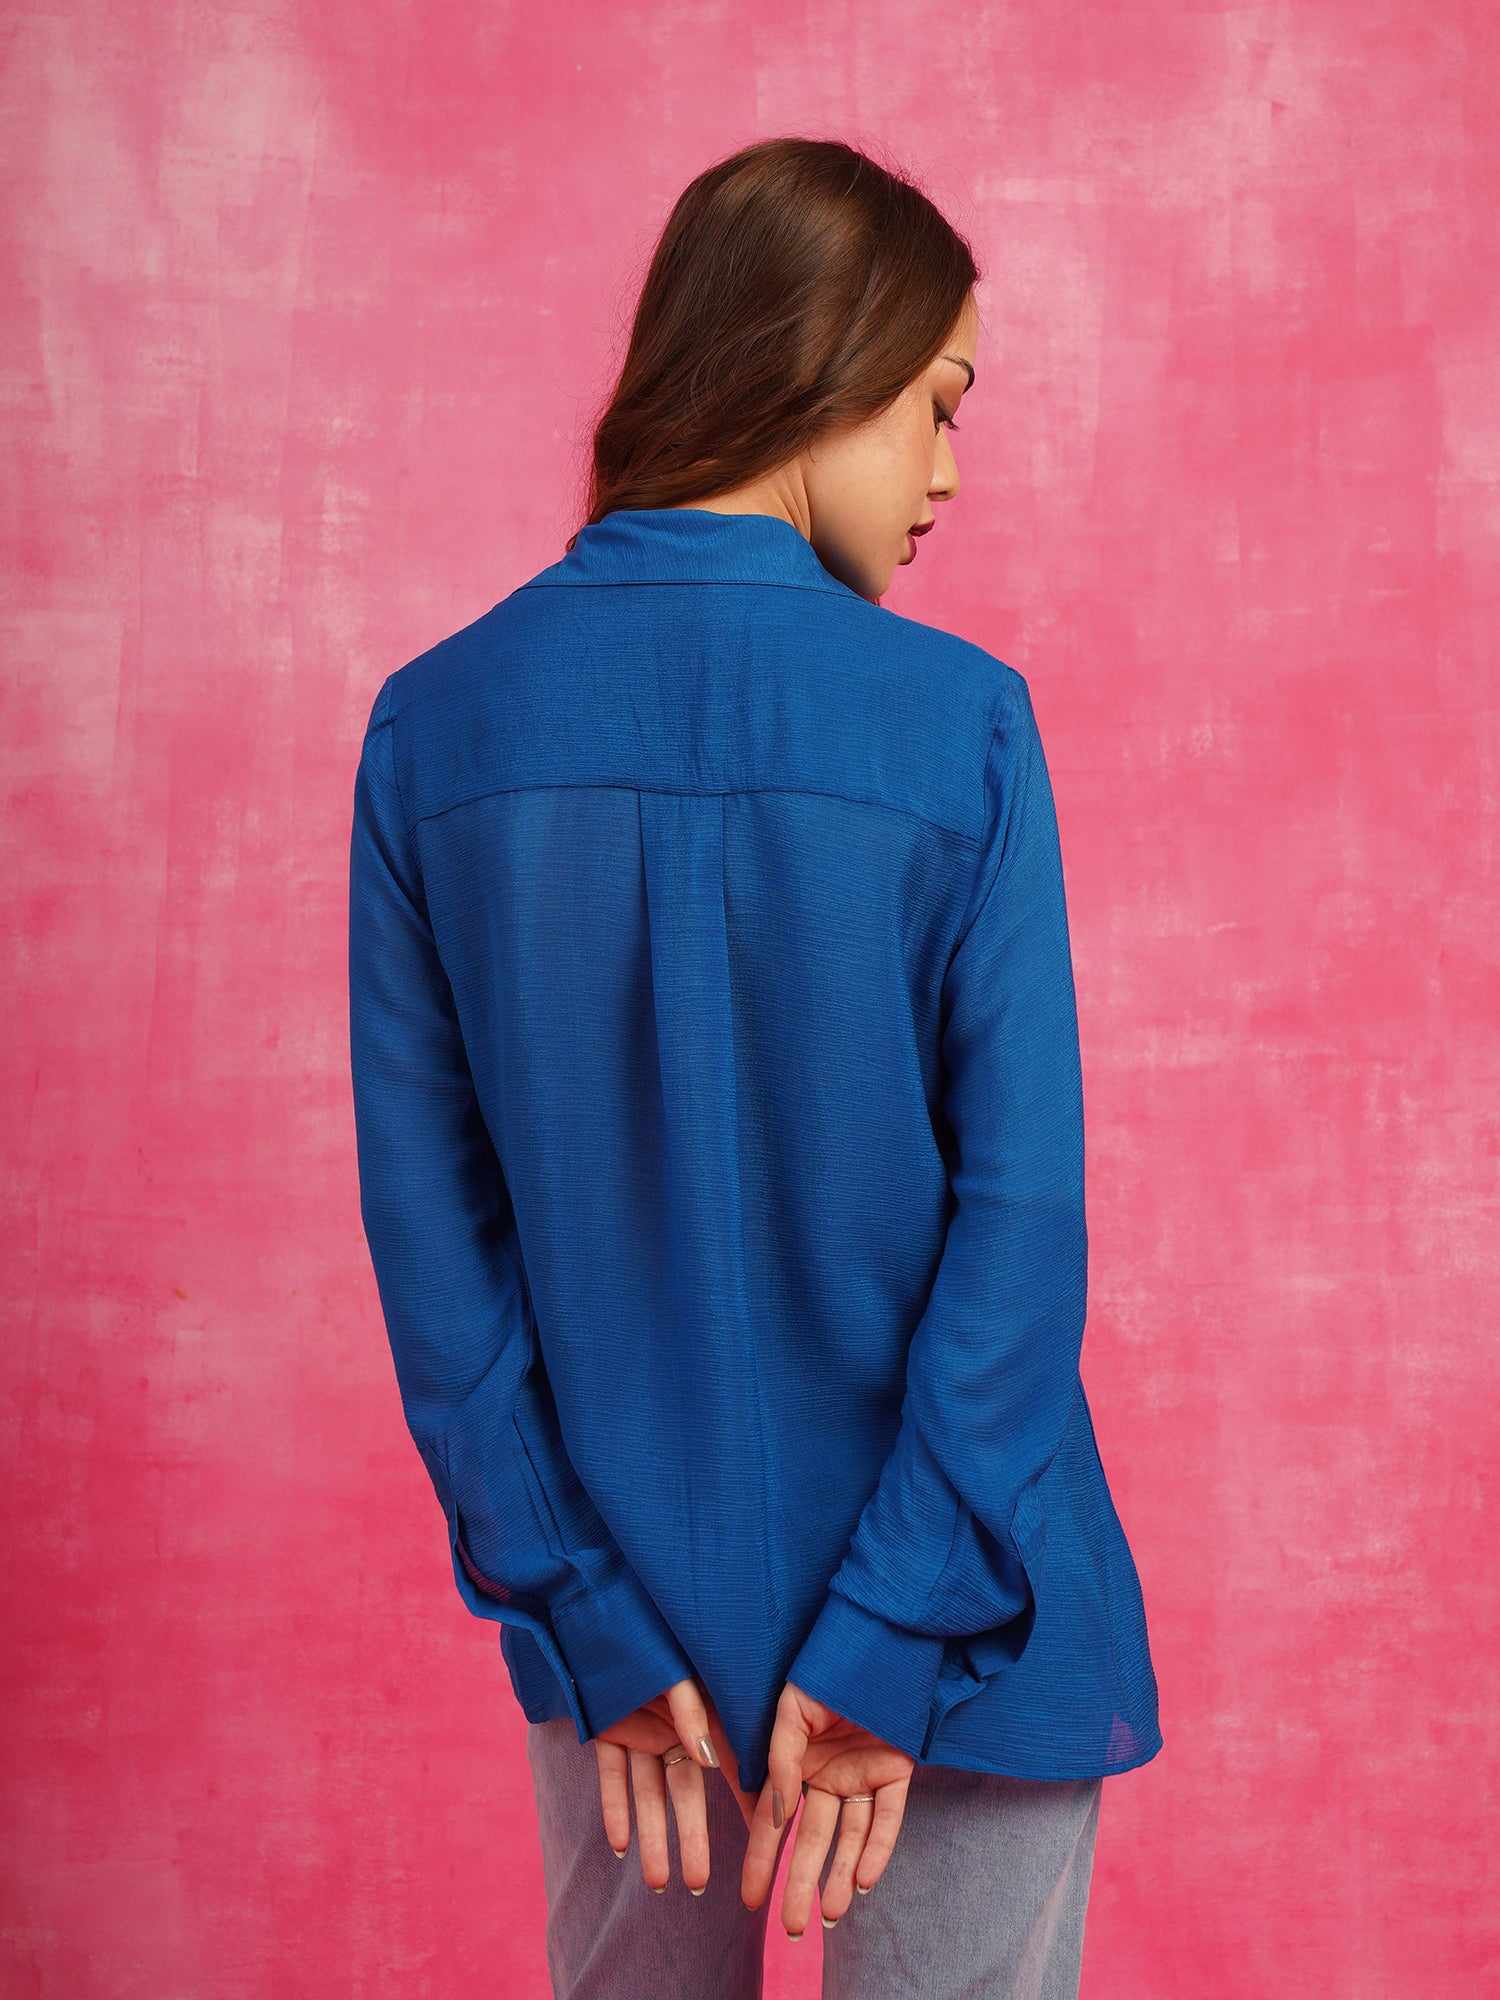 deluxe embellished blue shirt  